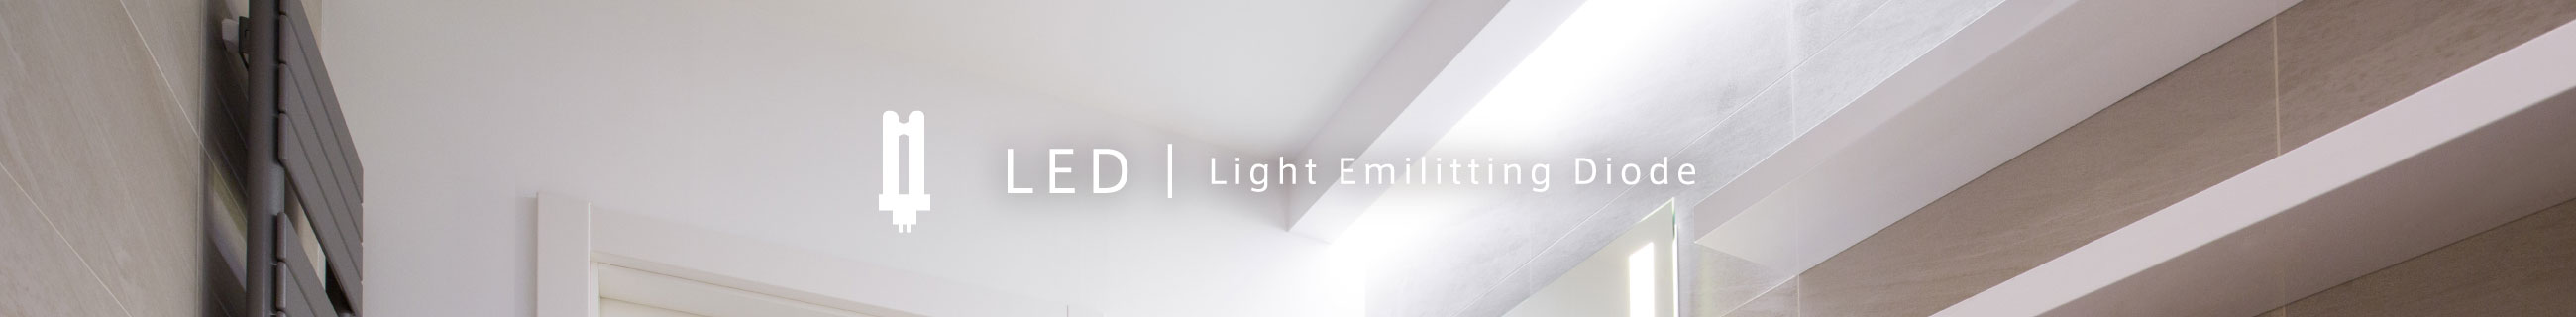 LED Light Emilitting Diode